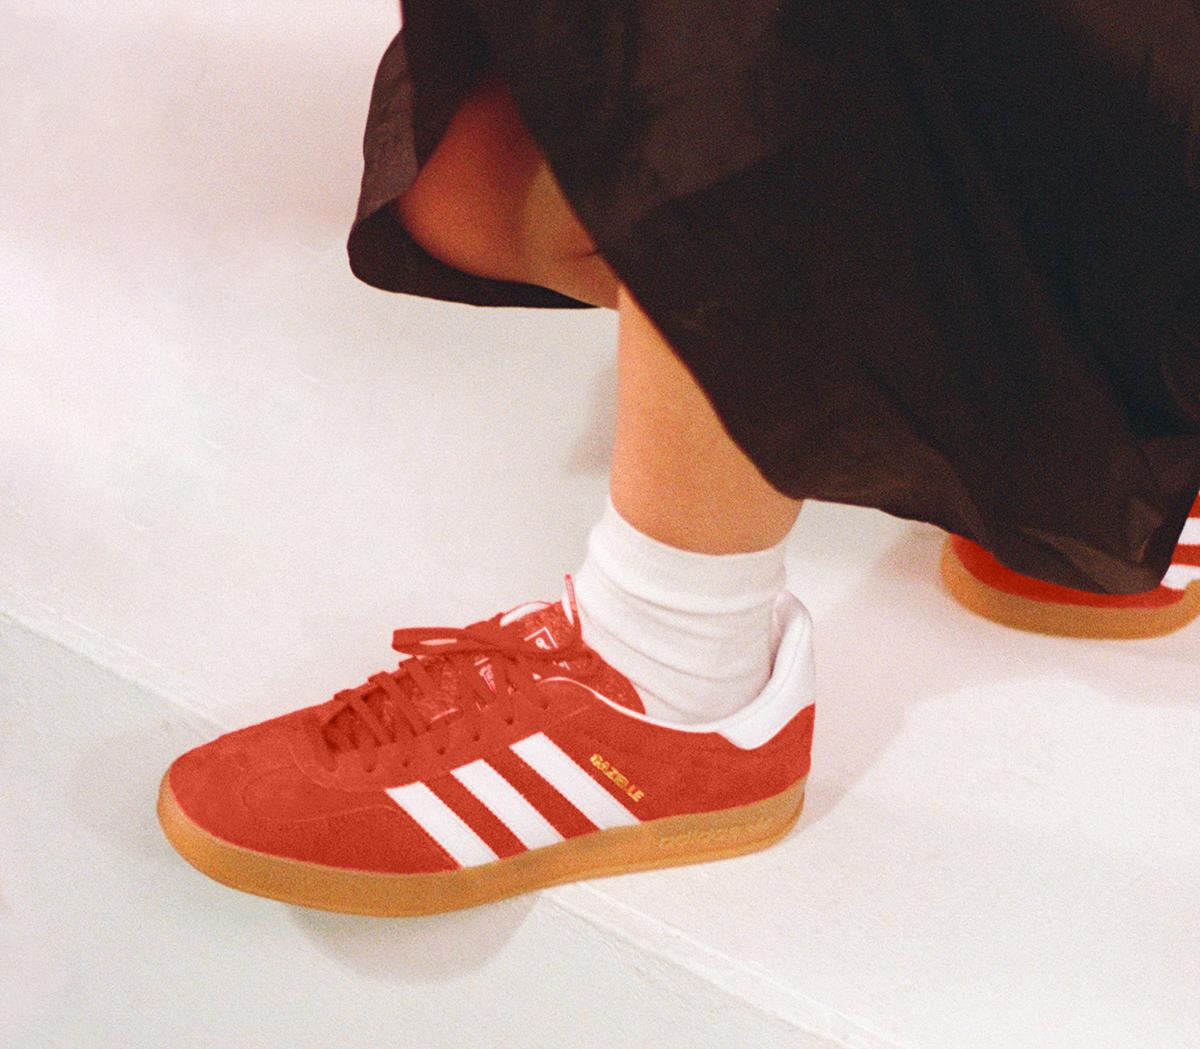 Traer Mm vesícula biliar adidas Gazelle Indoor Trainers Blood Orange White Gum - Men's Trainers